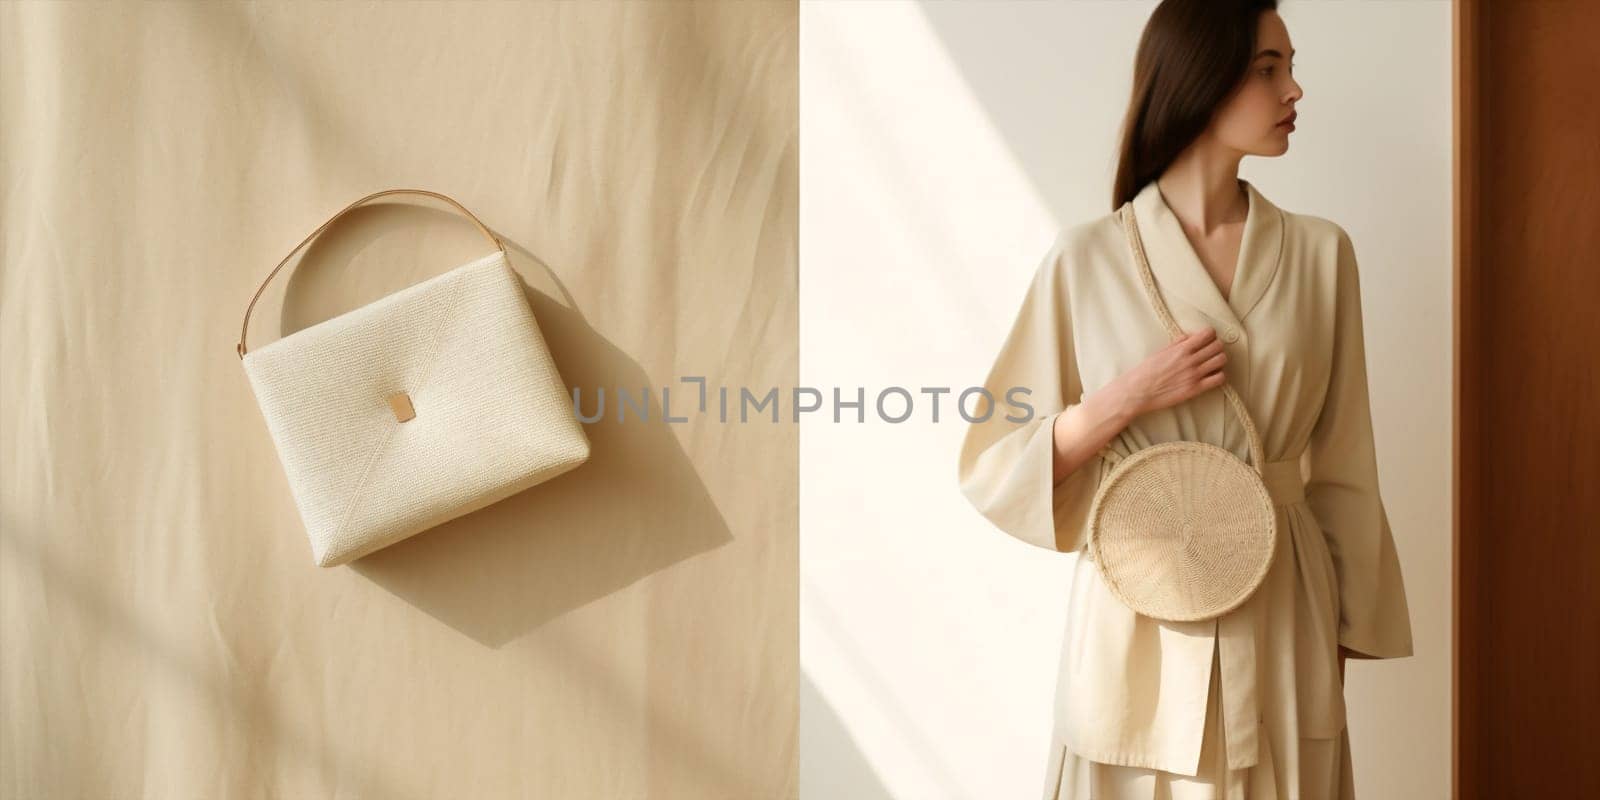 Luxury style modern beauty women trendy elegance design bags stylish fashionable minimal accessory by Vichizh